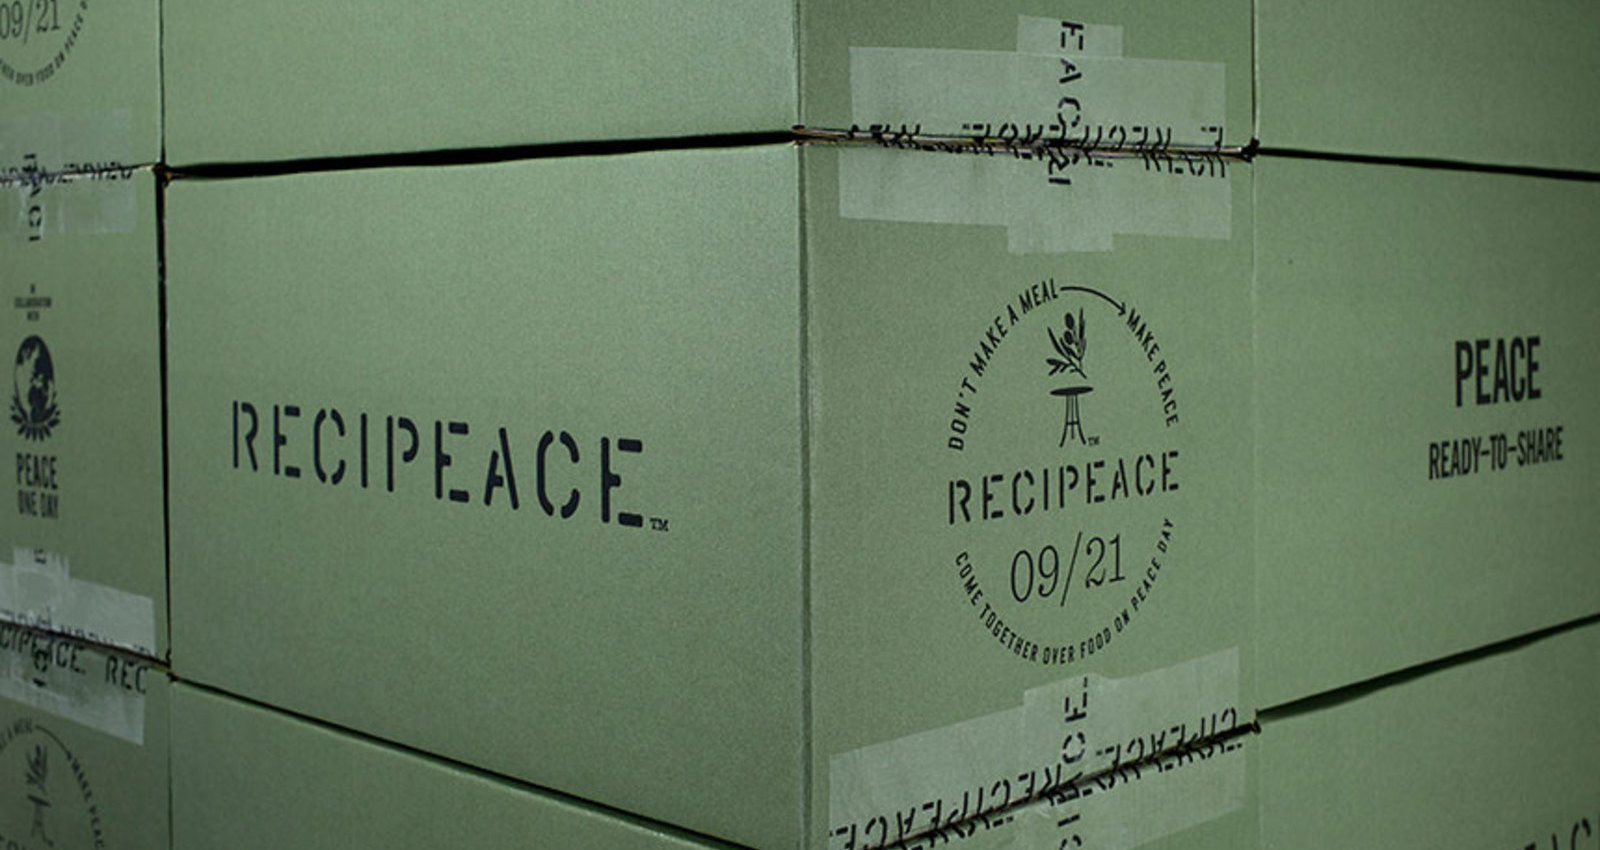 Recipeace Peace Kit